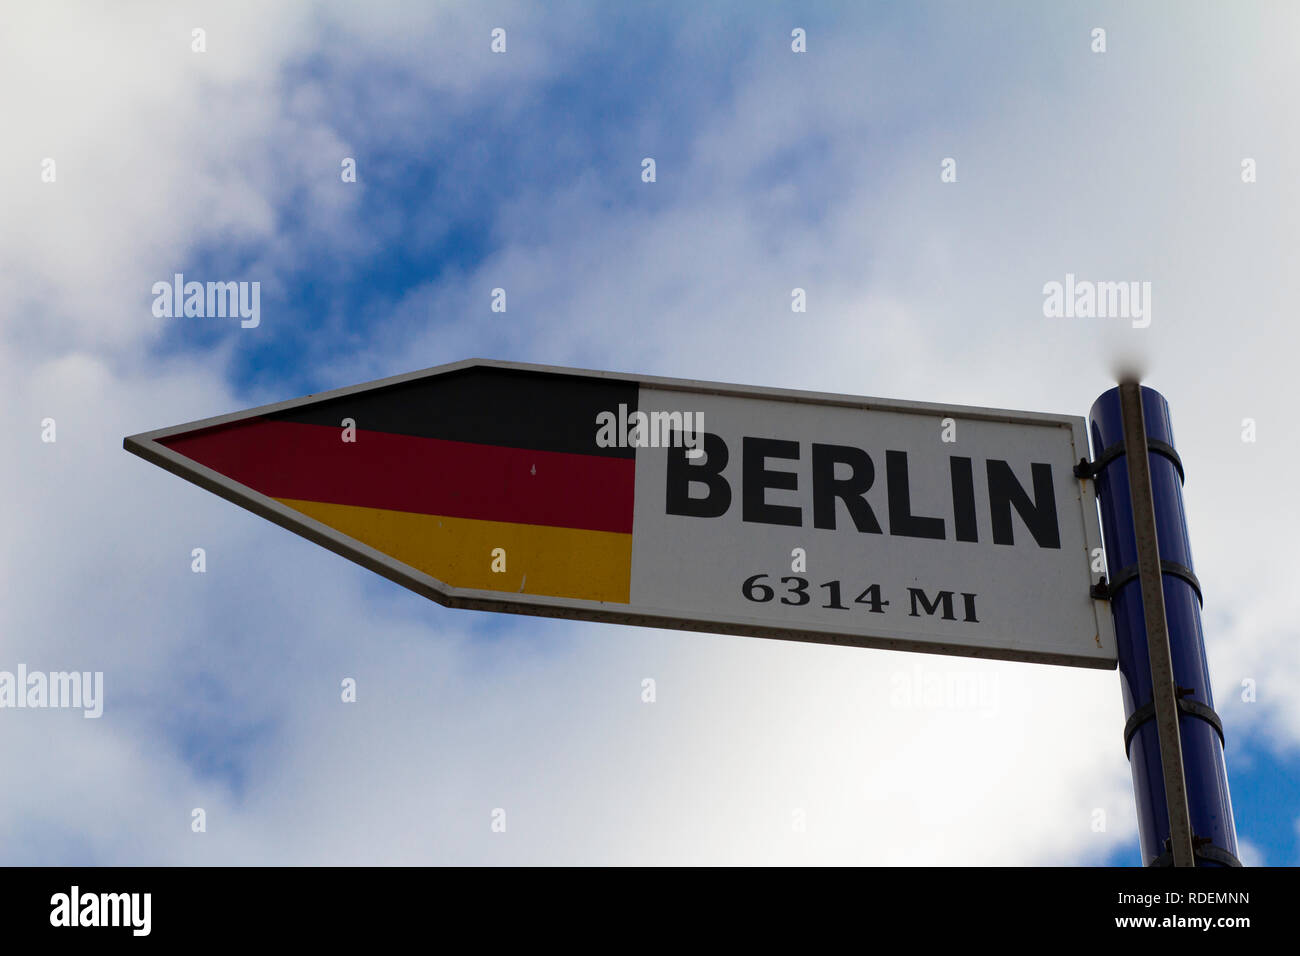 signpost, flag, berlin, flagge, miles, sky, meilen himmel wolke cloud blau schwarz rot gold black red blue Stock Photo